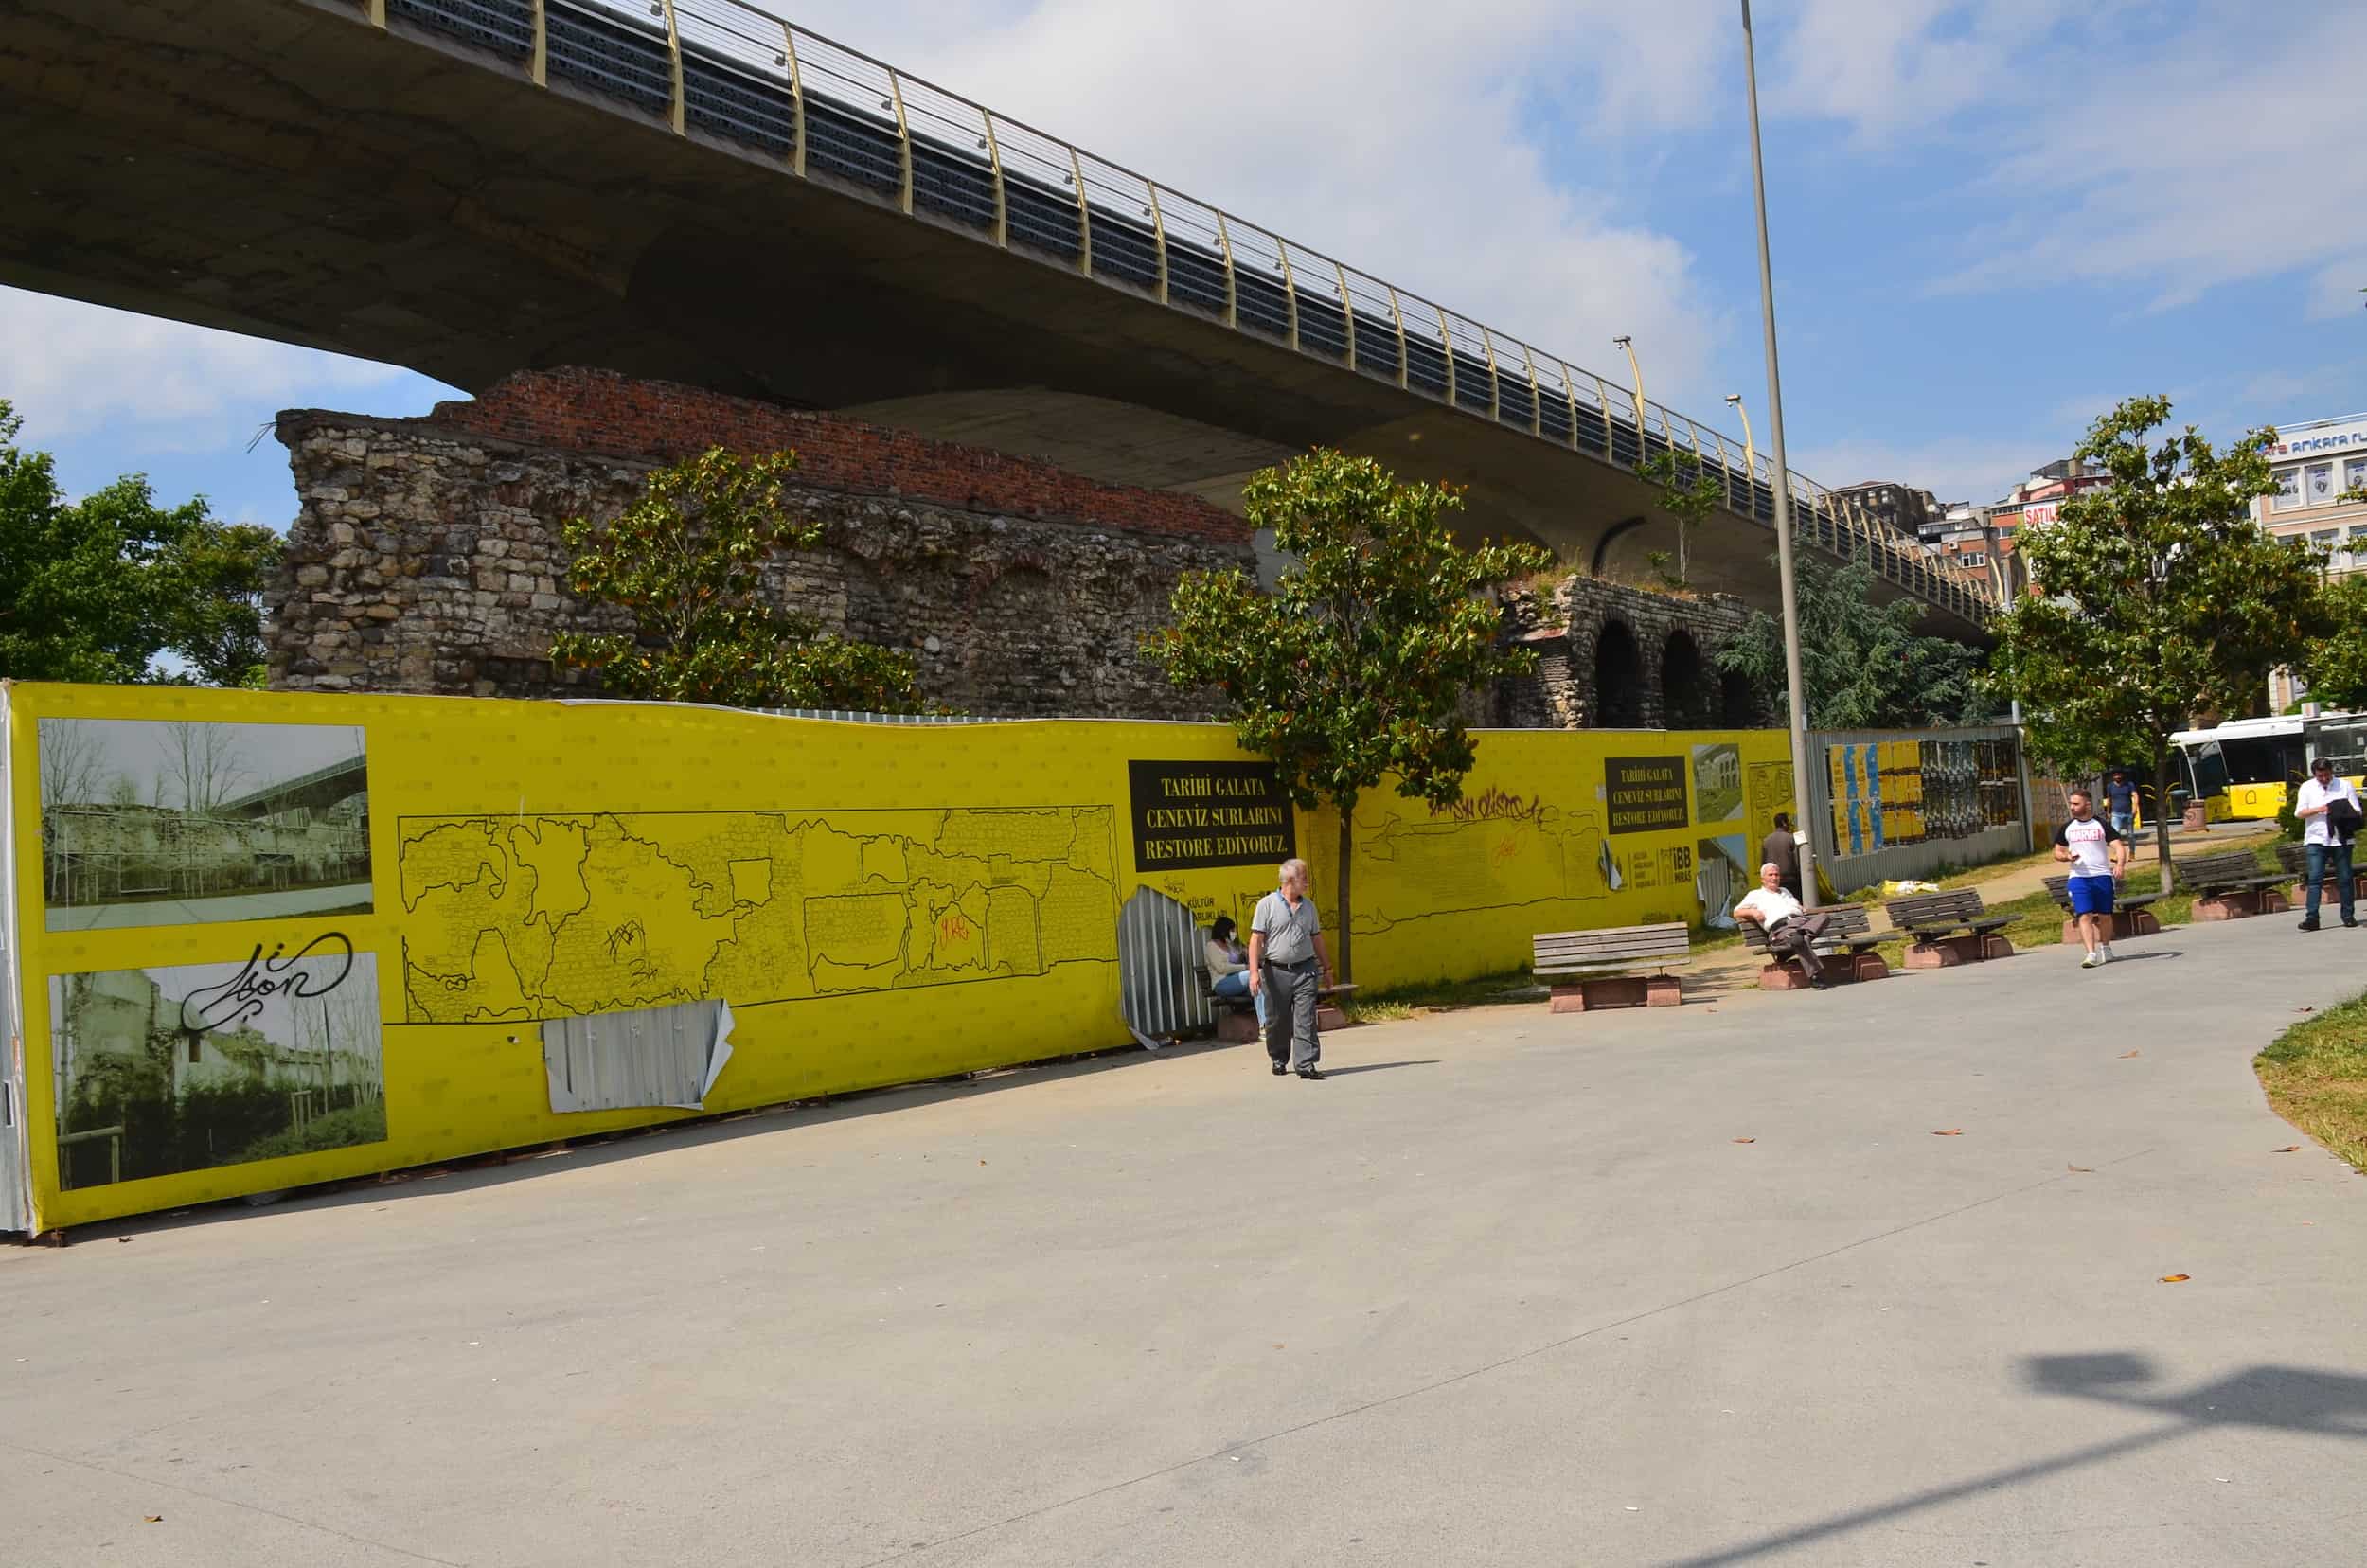 Genoese wall under restoration in May 2022